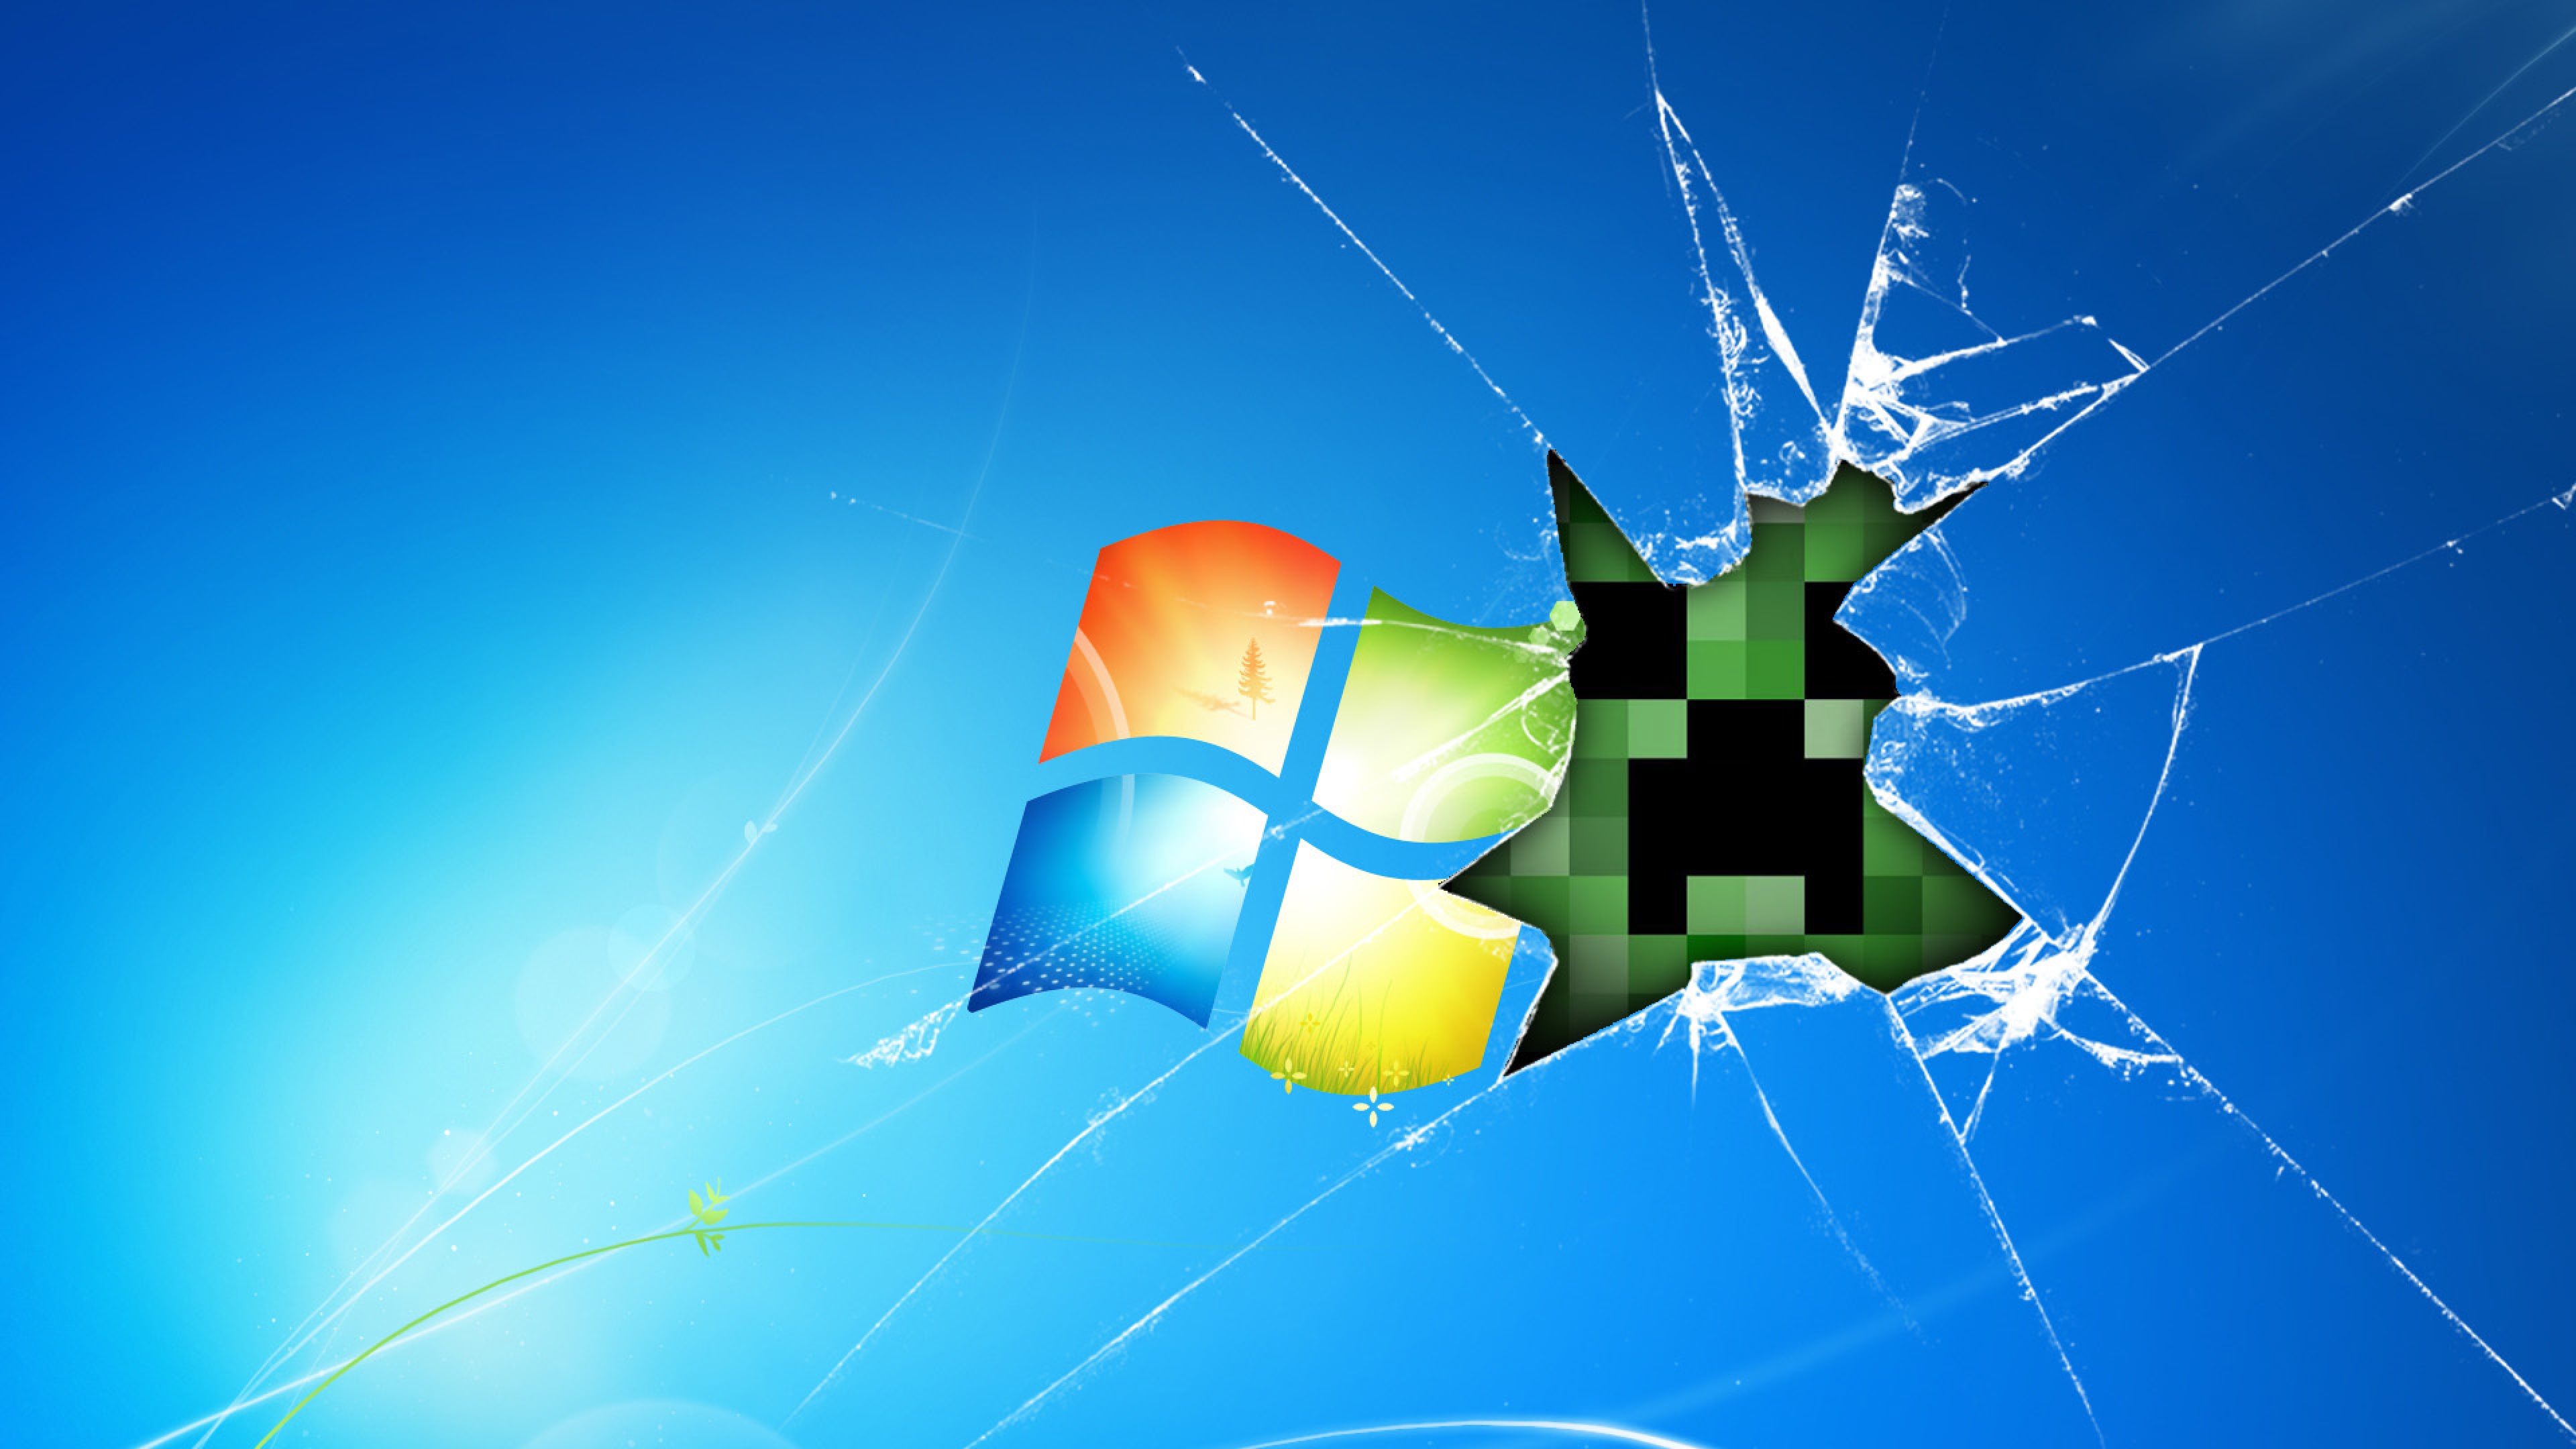 Windows Minecraft Game Glass Desktop 4k Ultra HD